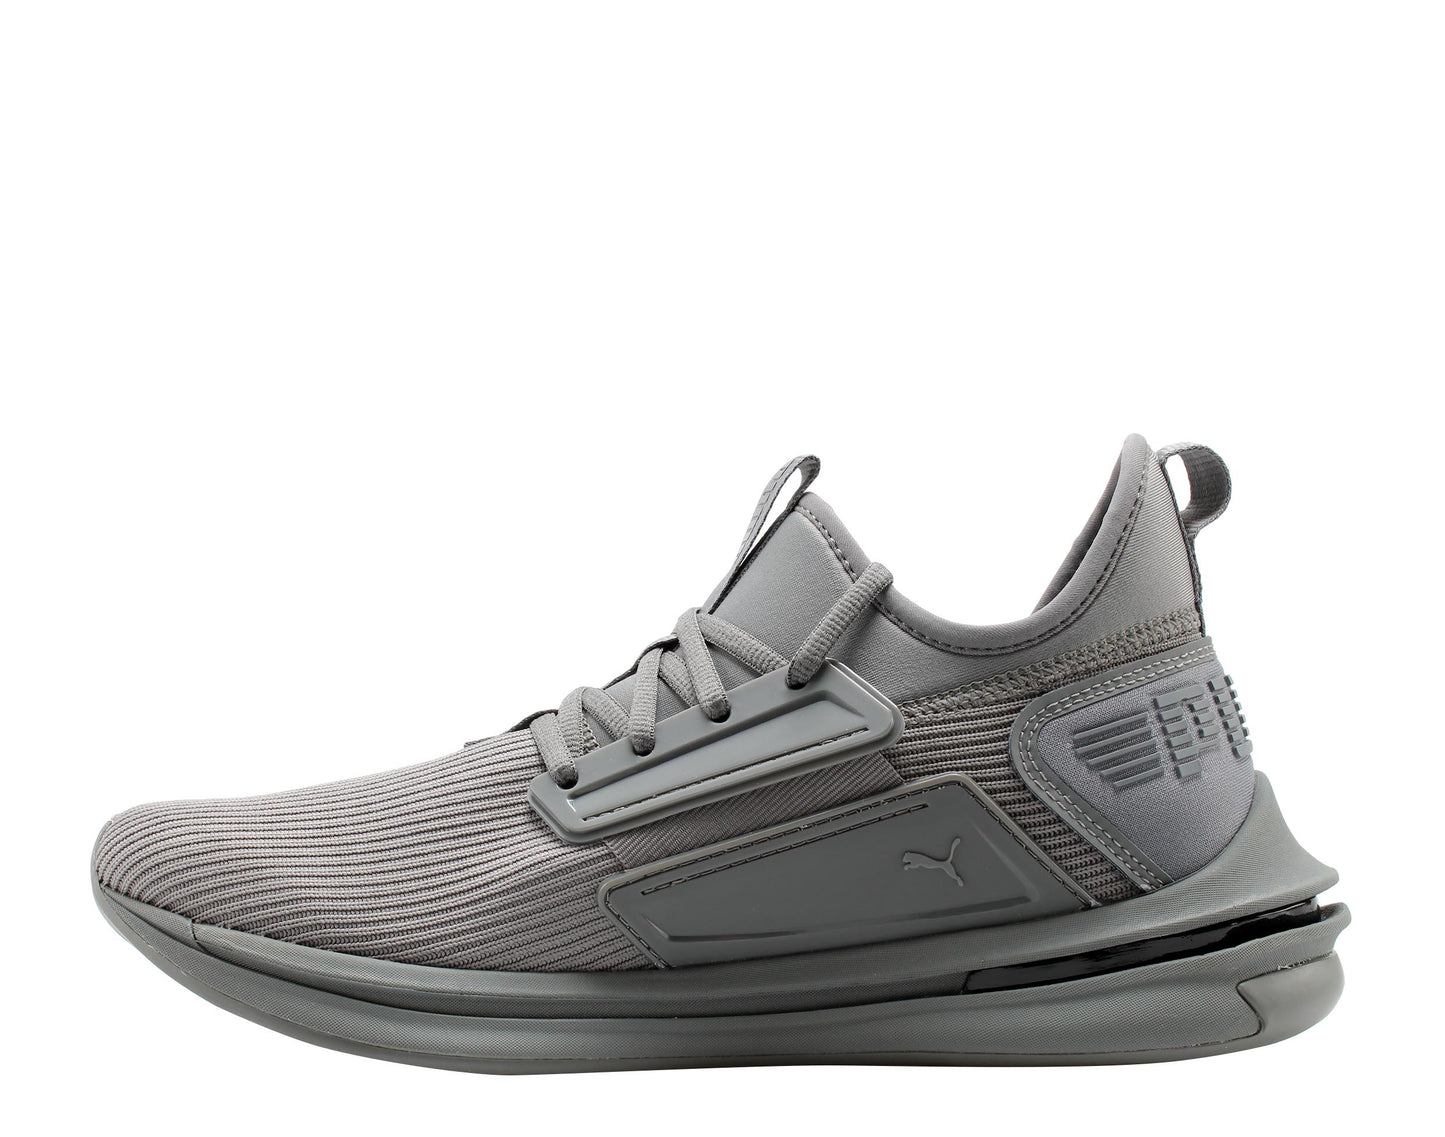 Puma IGNITE Limitless SR Quite Shade/Grey Men's Running Shoes 19048204